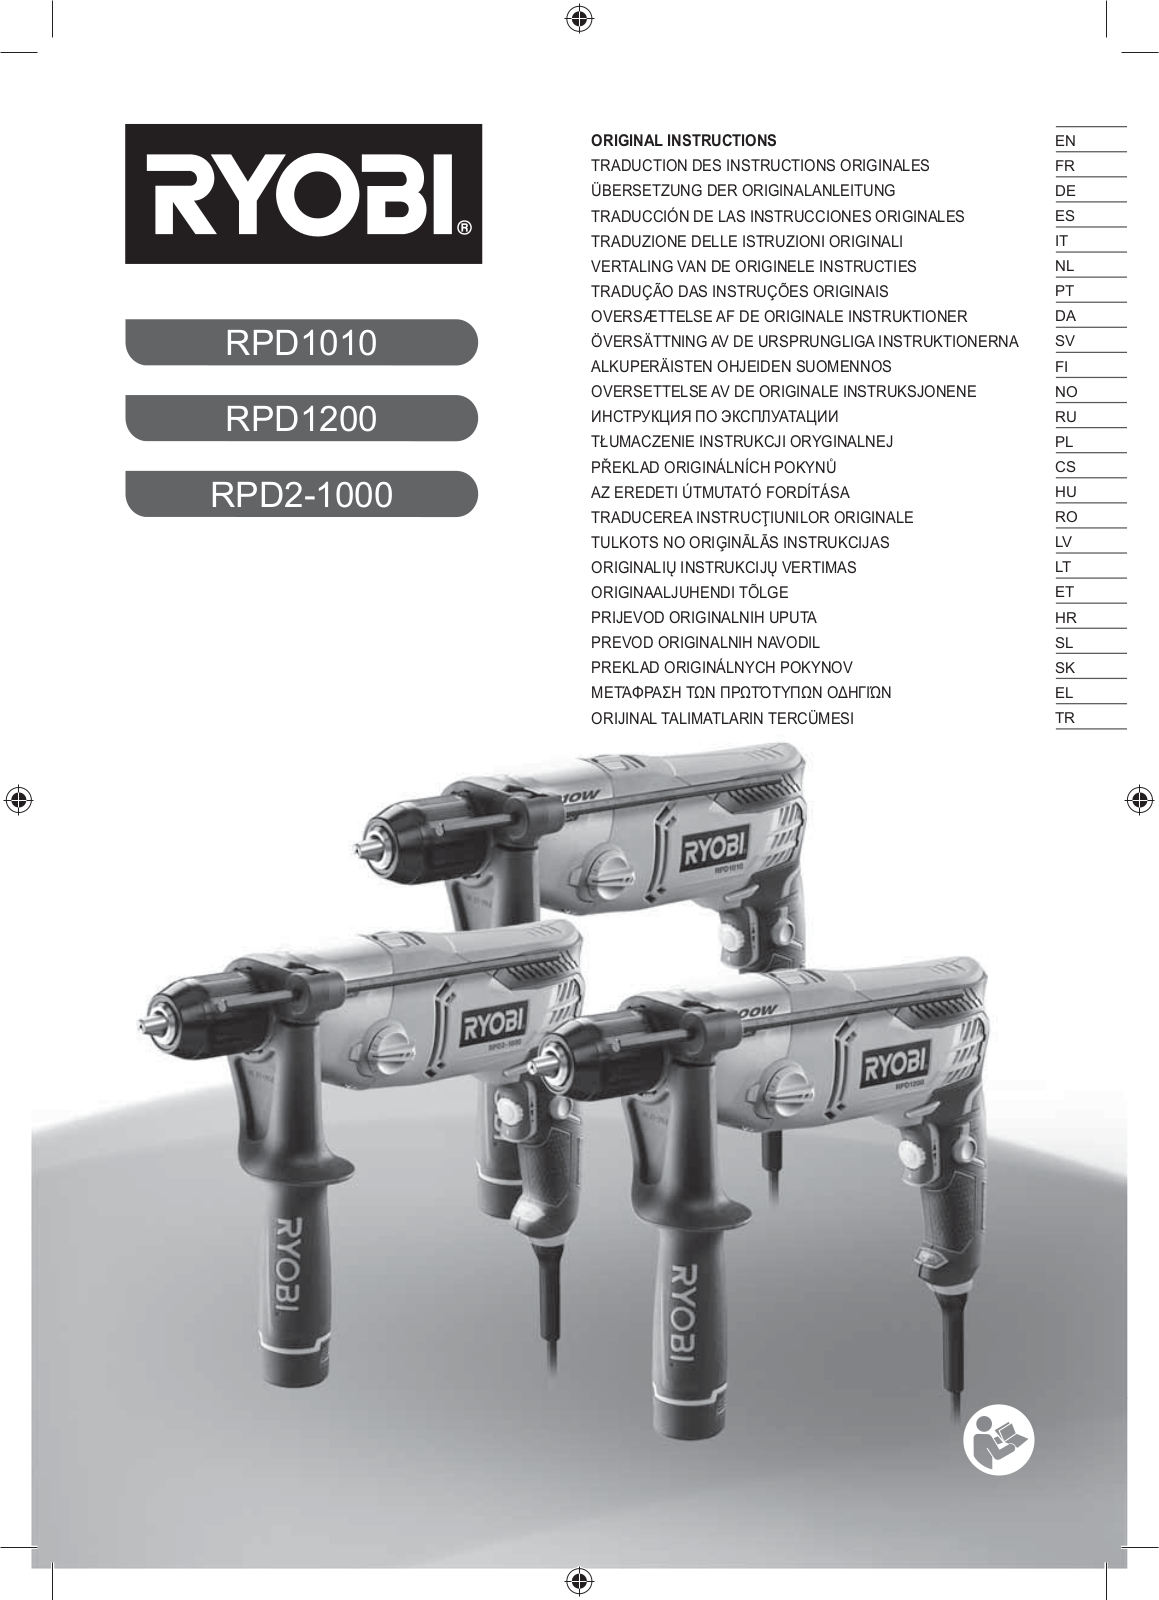 Ryobi RPD2-1000, RPD1010, RPD1200 User Manual